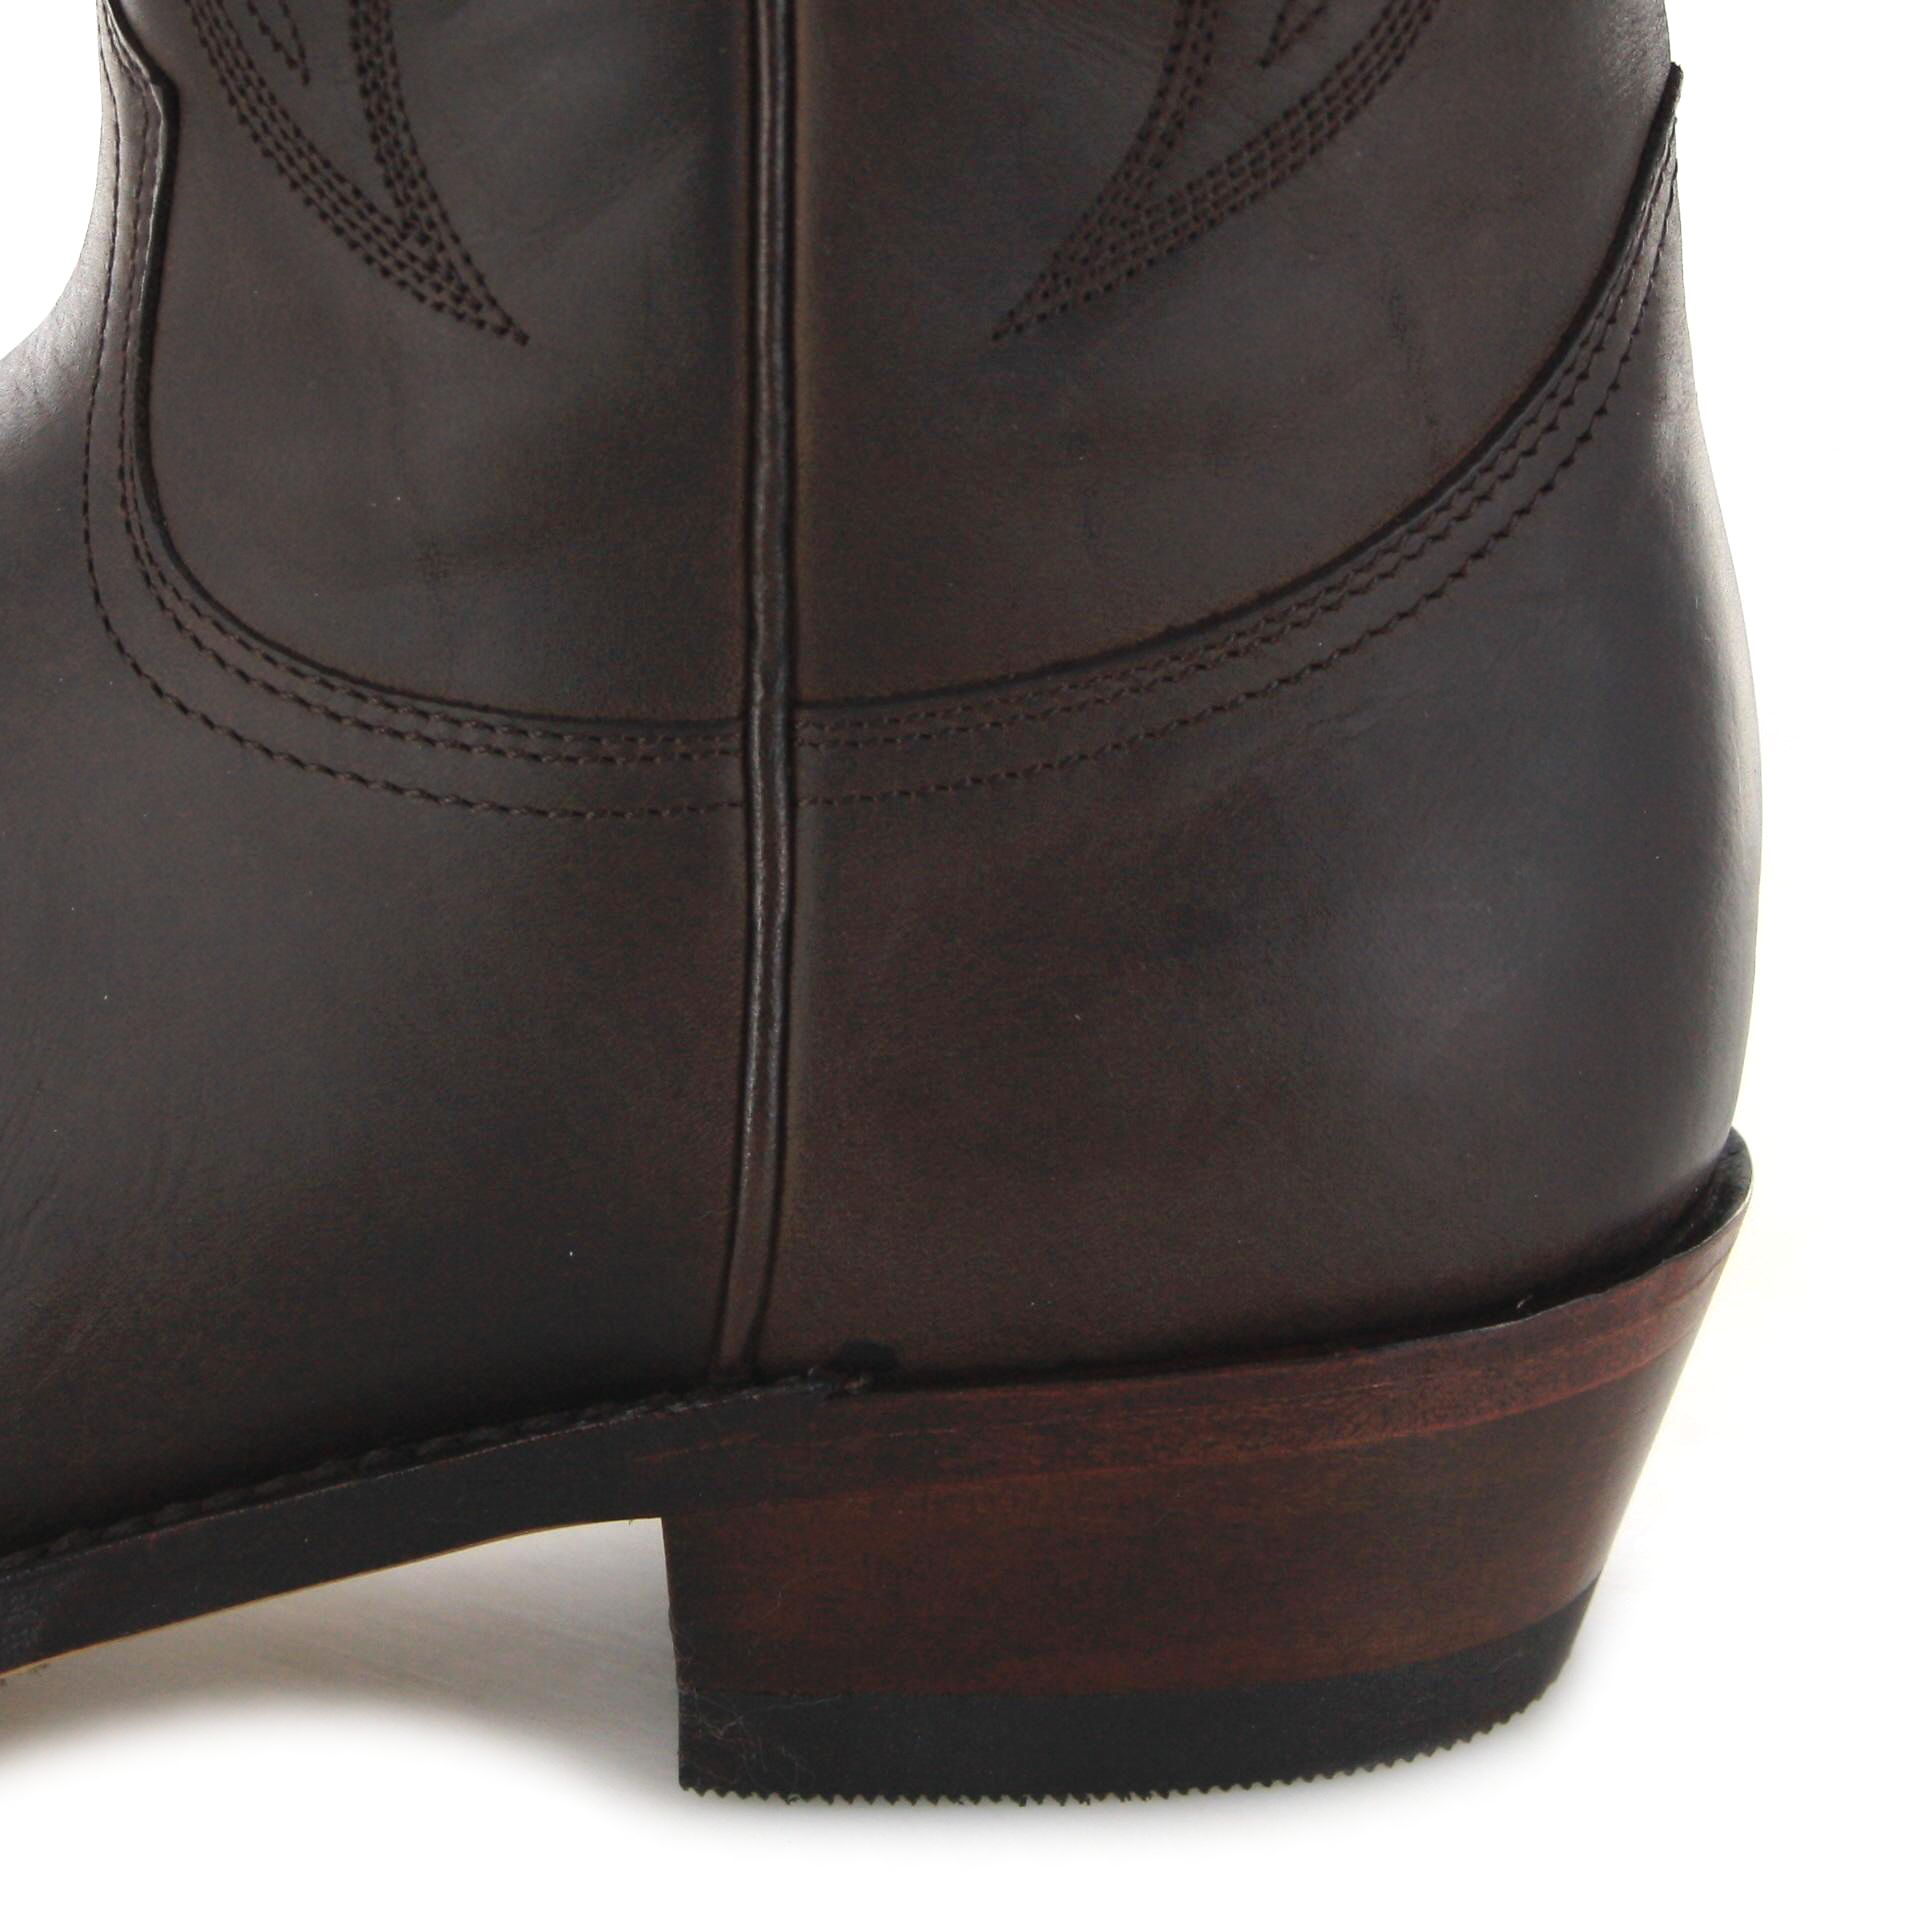 Sendra Boots 2073-58 Chocolate Western boot - dark brown ...